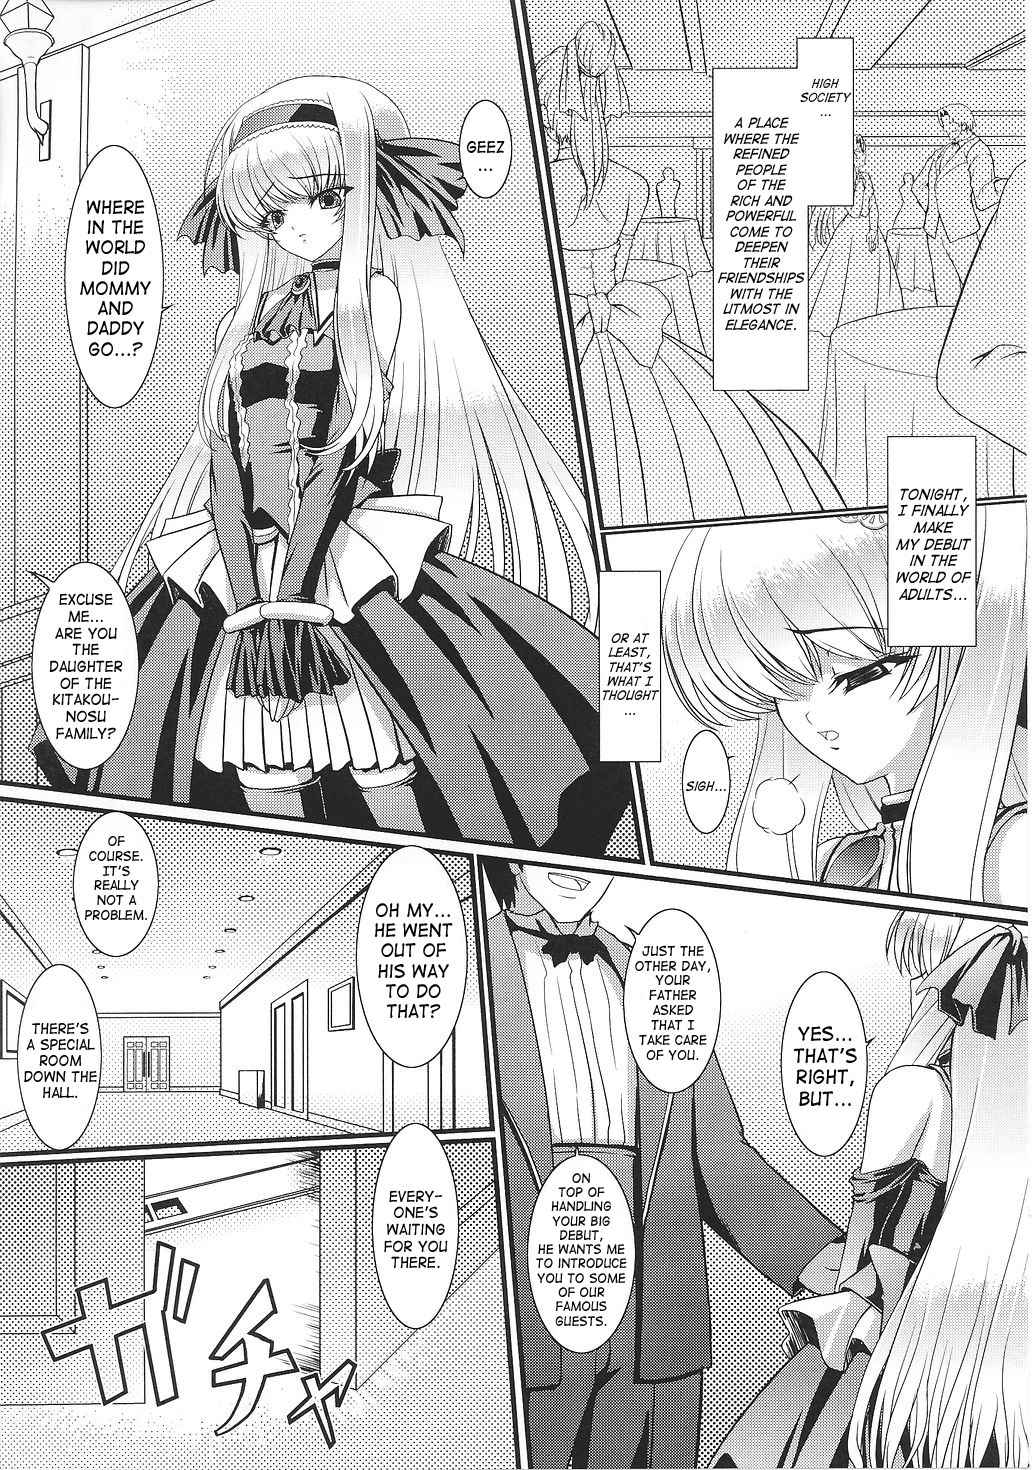 Reading Unrein Hentai 6 Female Slave Auction Page 1 Hentai Manga Online At Hentai2read